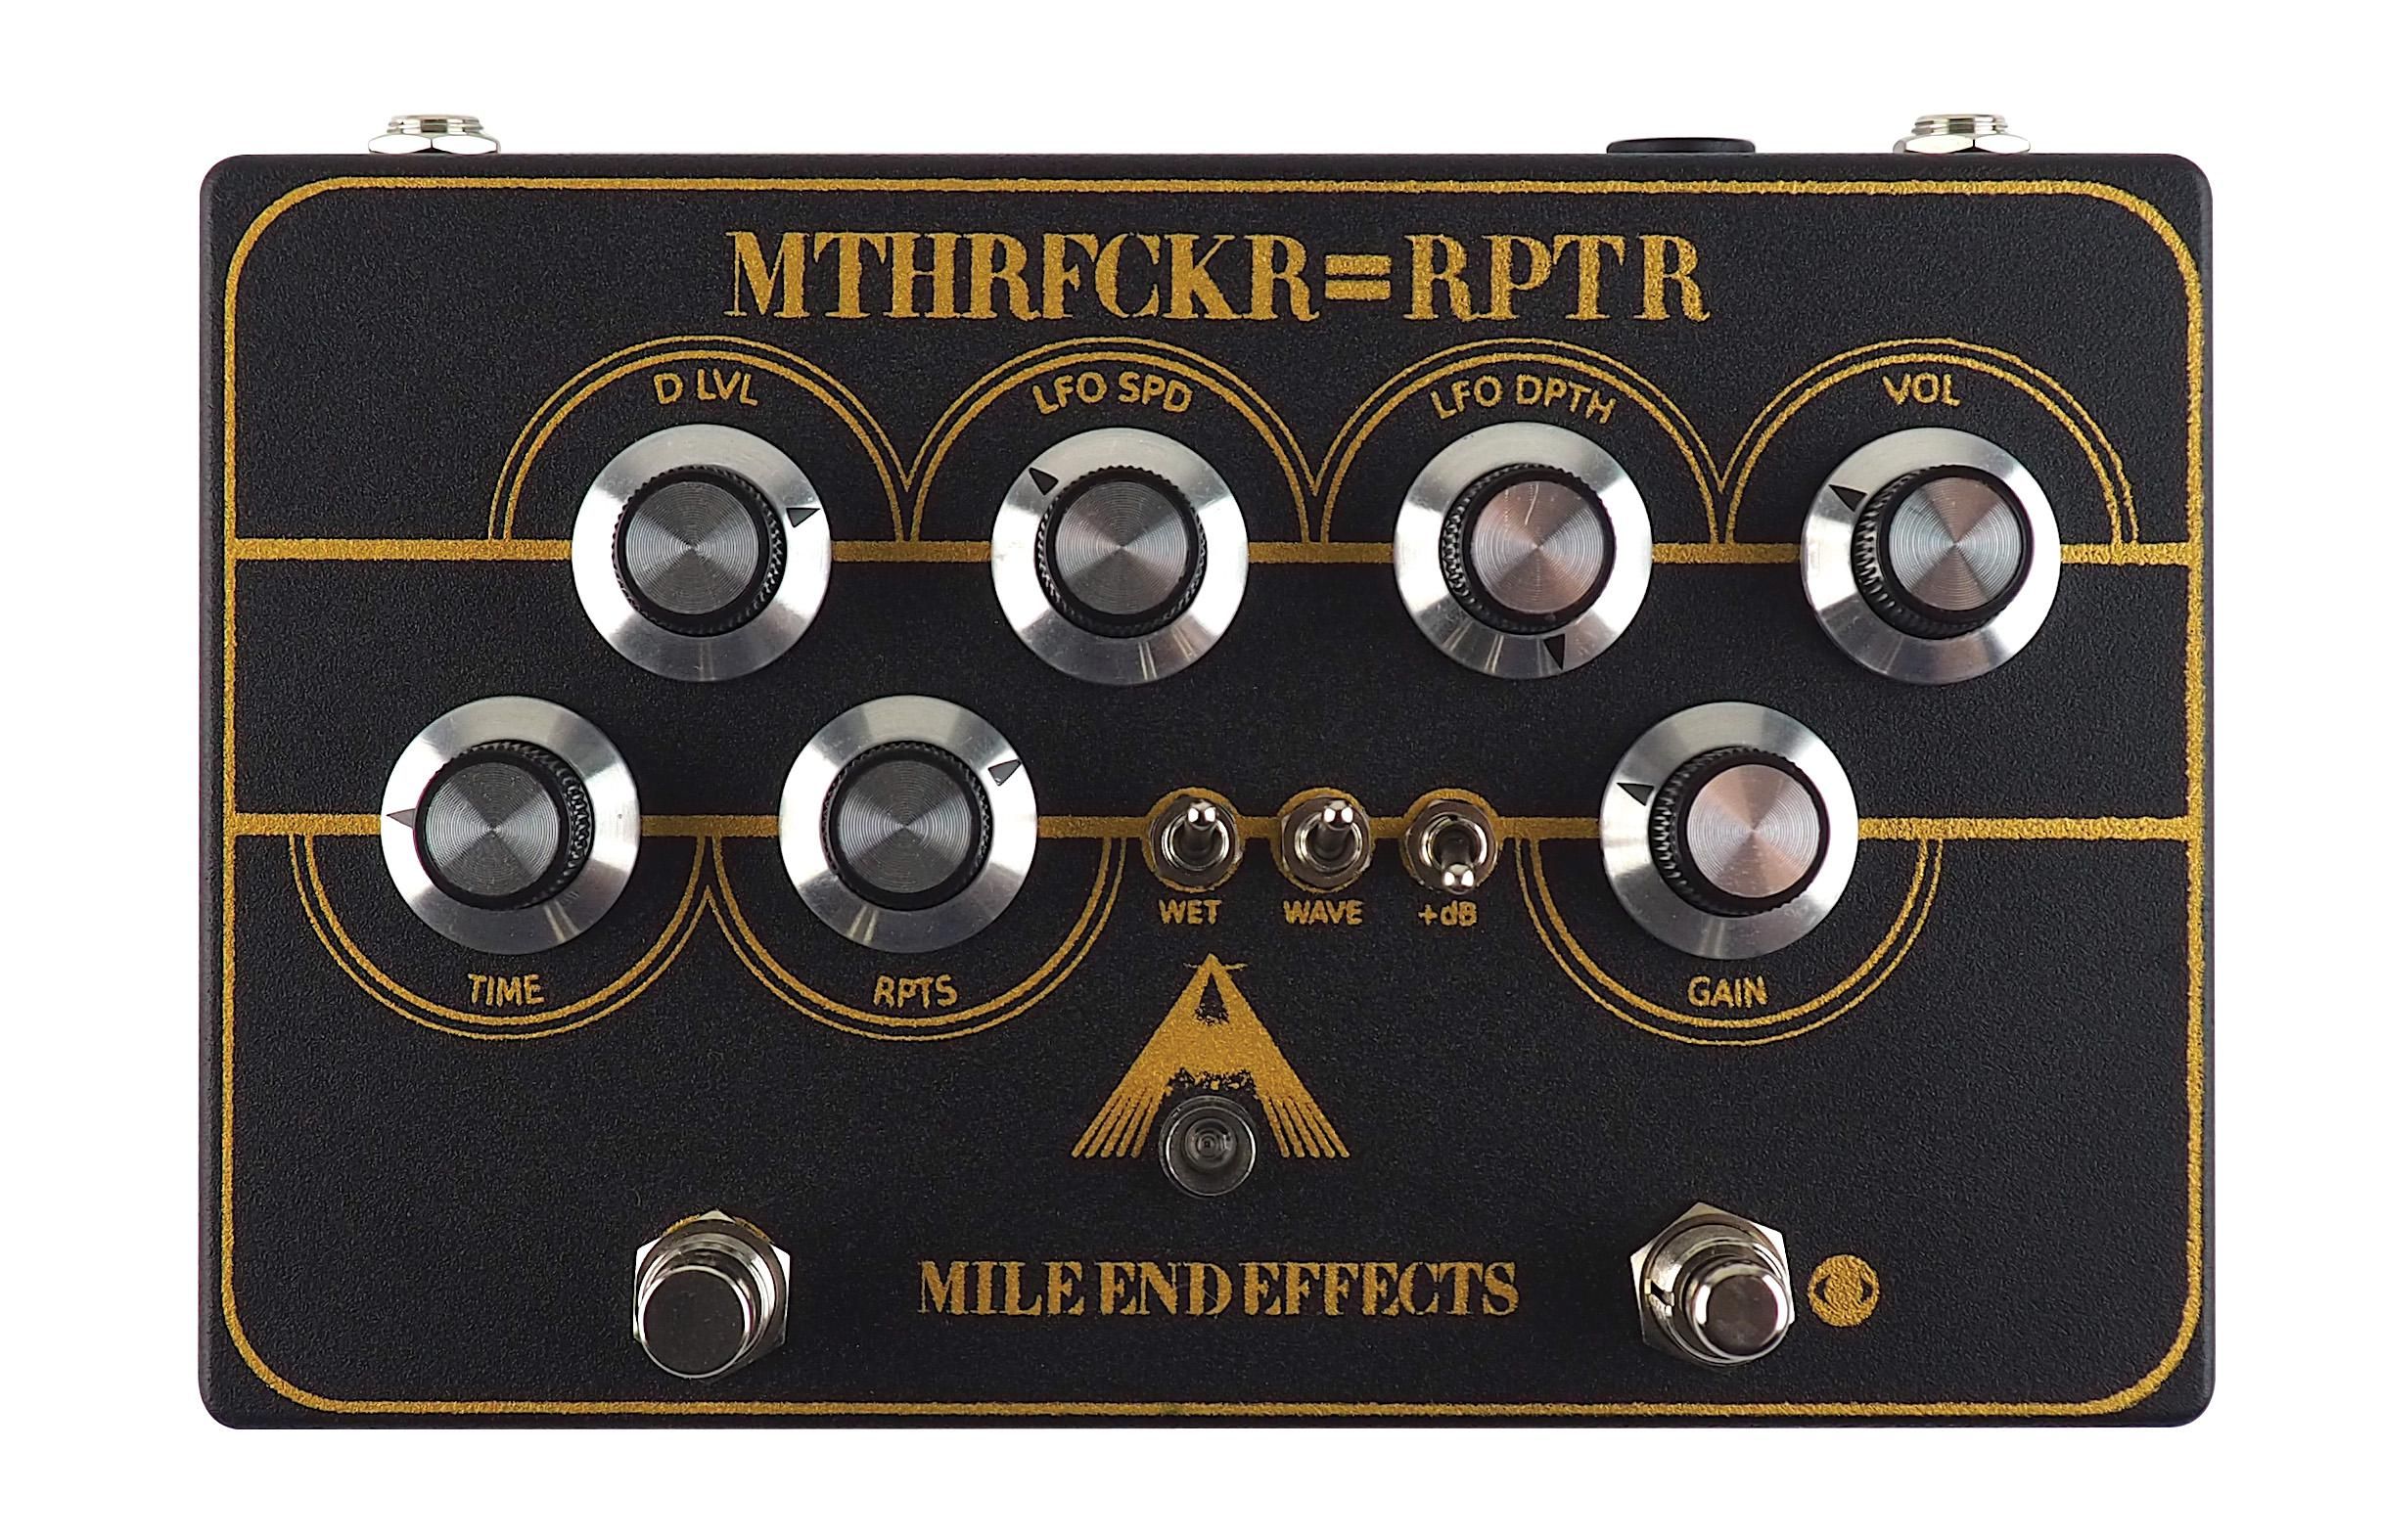 Mile End Effects MTHRFCKR=RPTR delay, overdrive, modulation